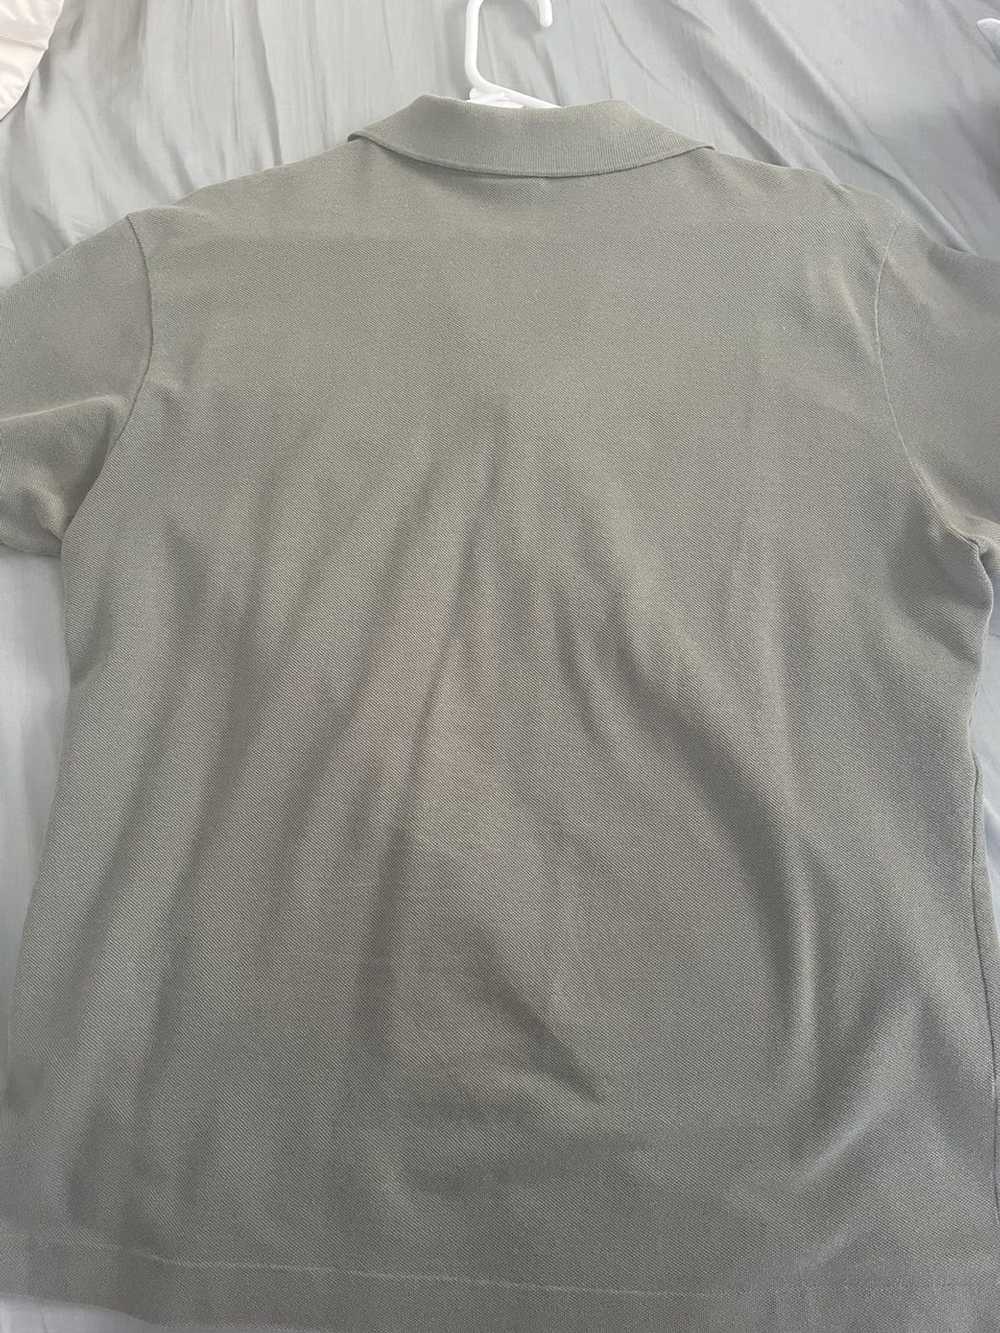 Lacoste Lacoste Polo shirt - image 5